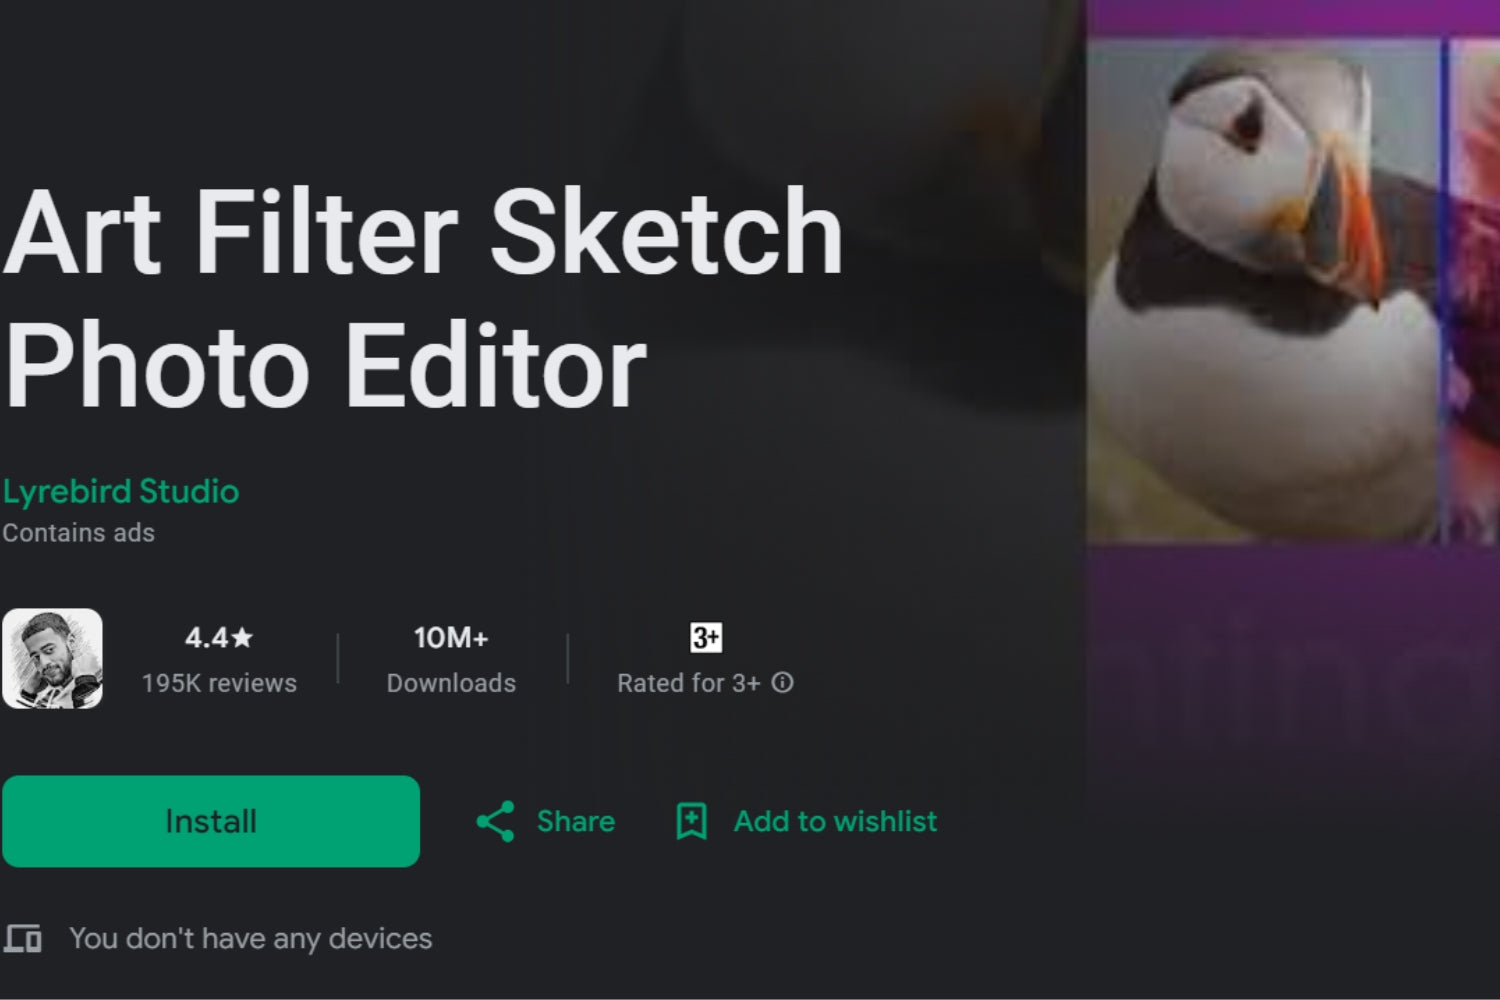 The interface of ArtFilter Photo Editor website